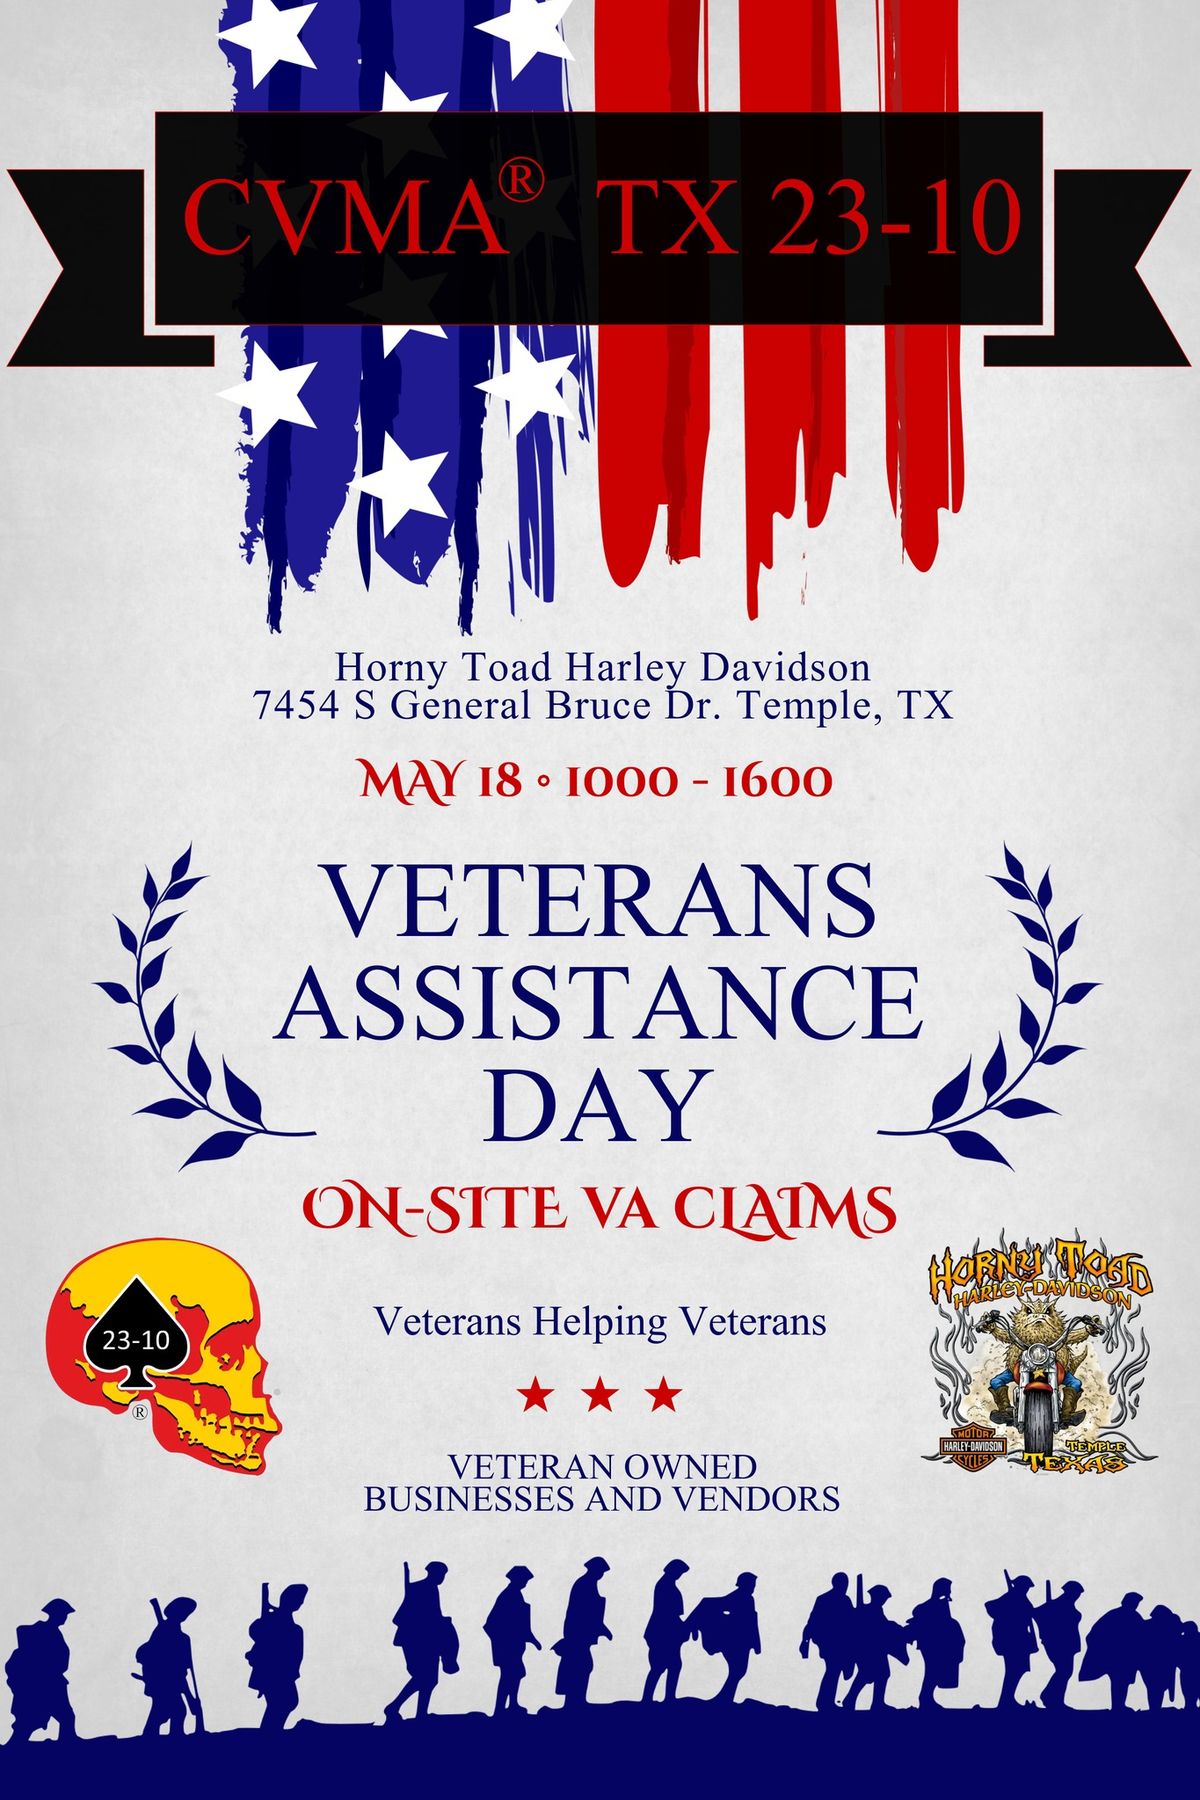 CVMA 23-10 Veterans Assistance Day